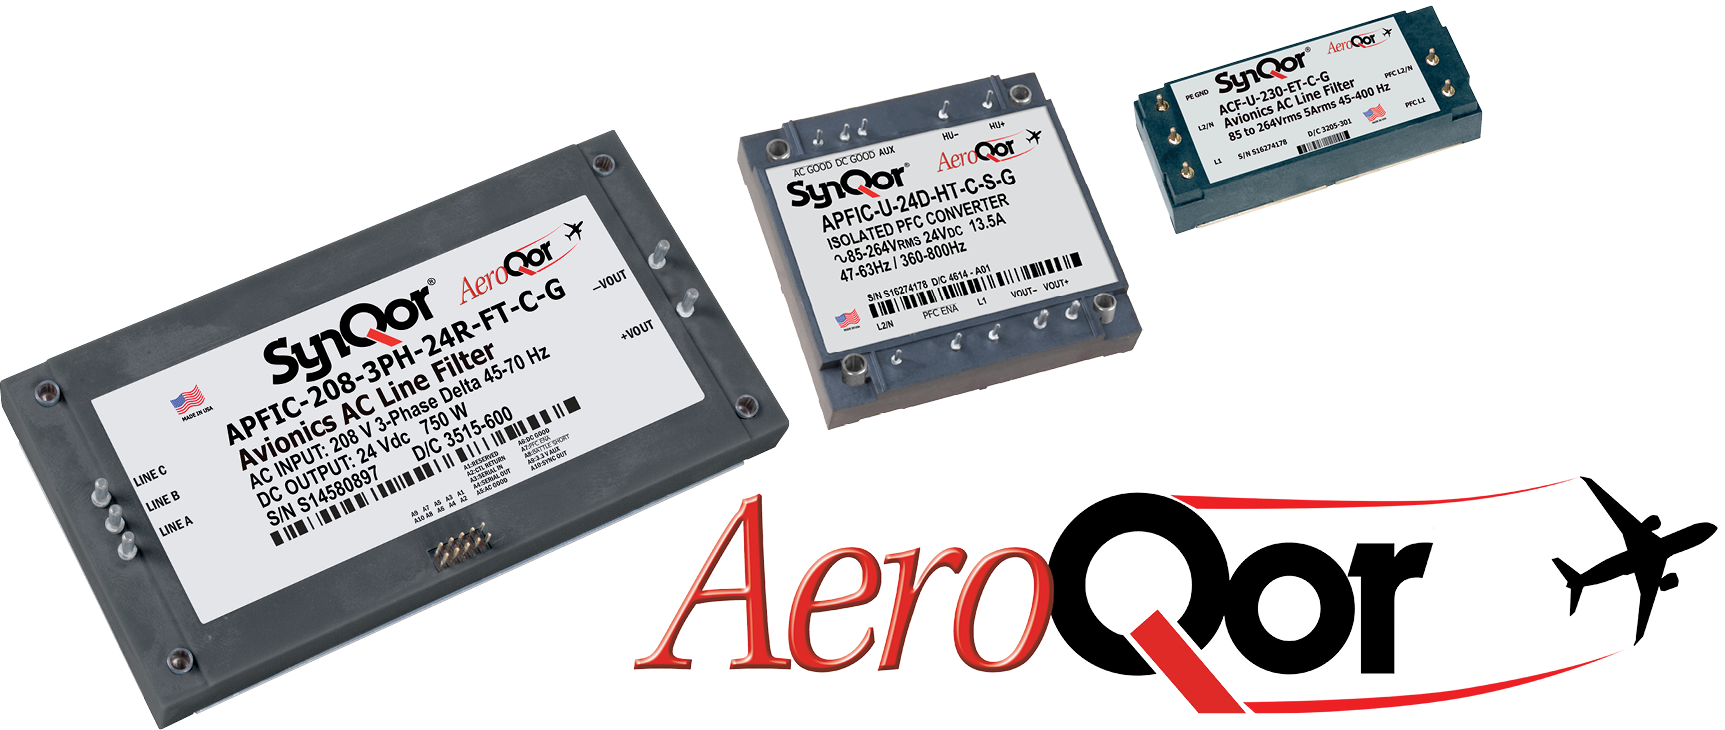 AeroQor-Power Factor Correction, AC-DC Converter for Airborne Applications